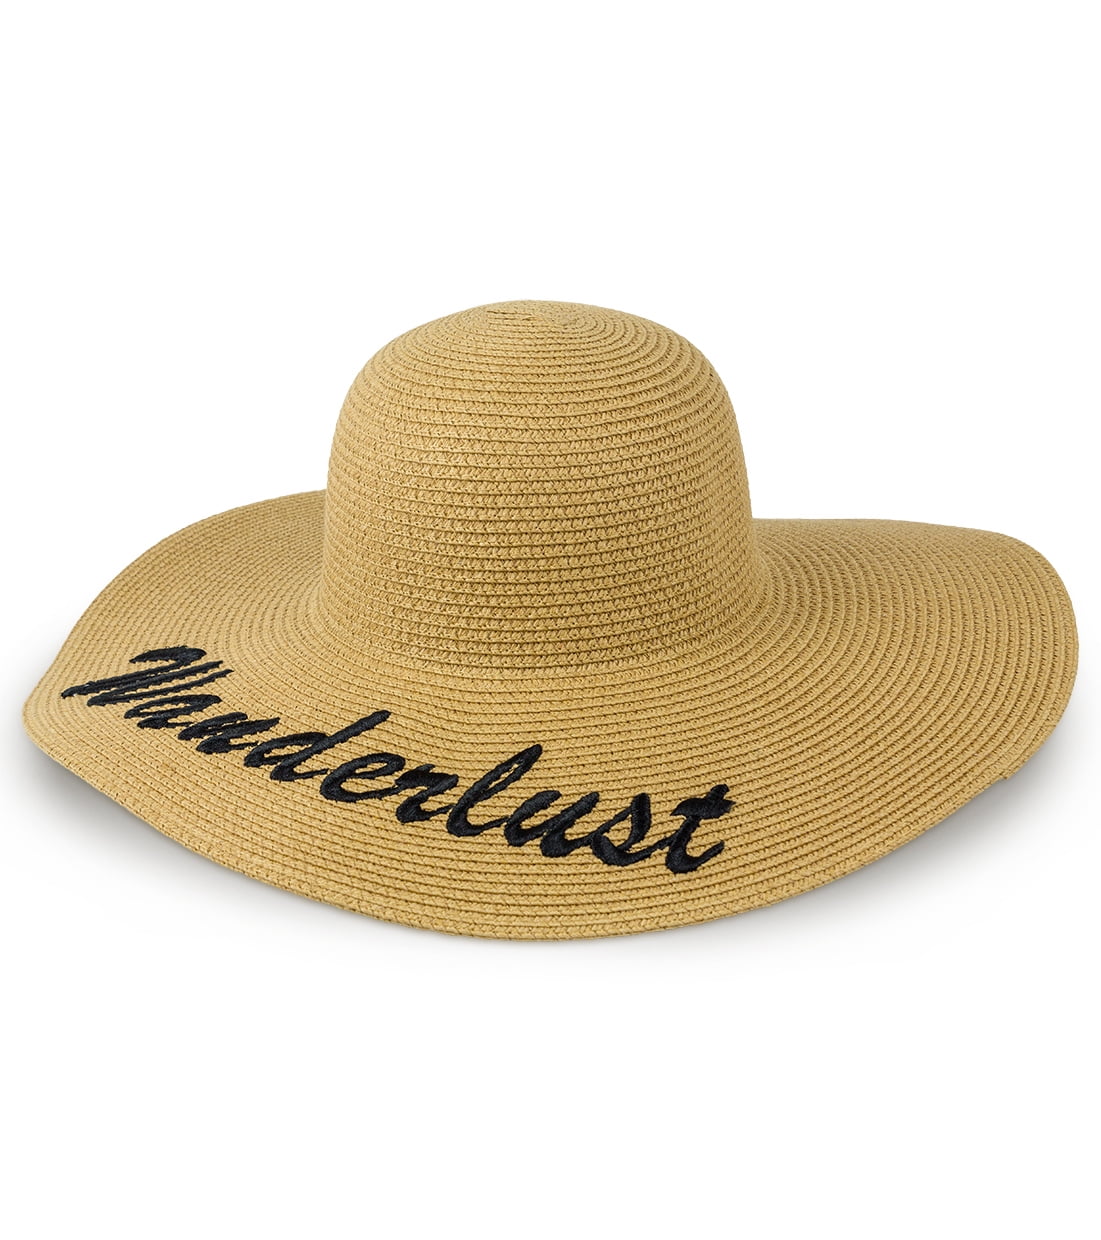 Women's Adult Embroidered Straw Floppy Sun Hat